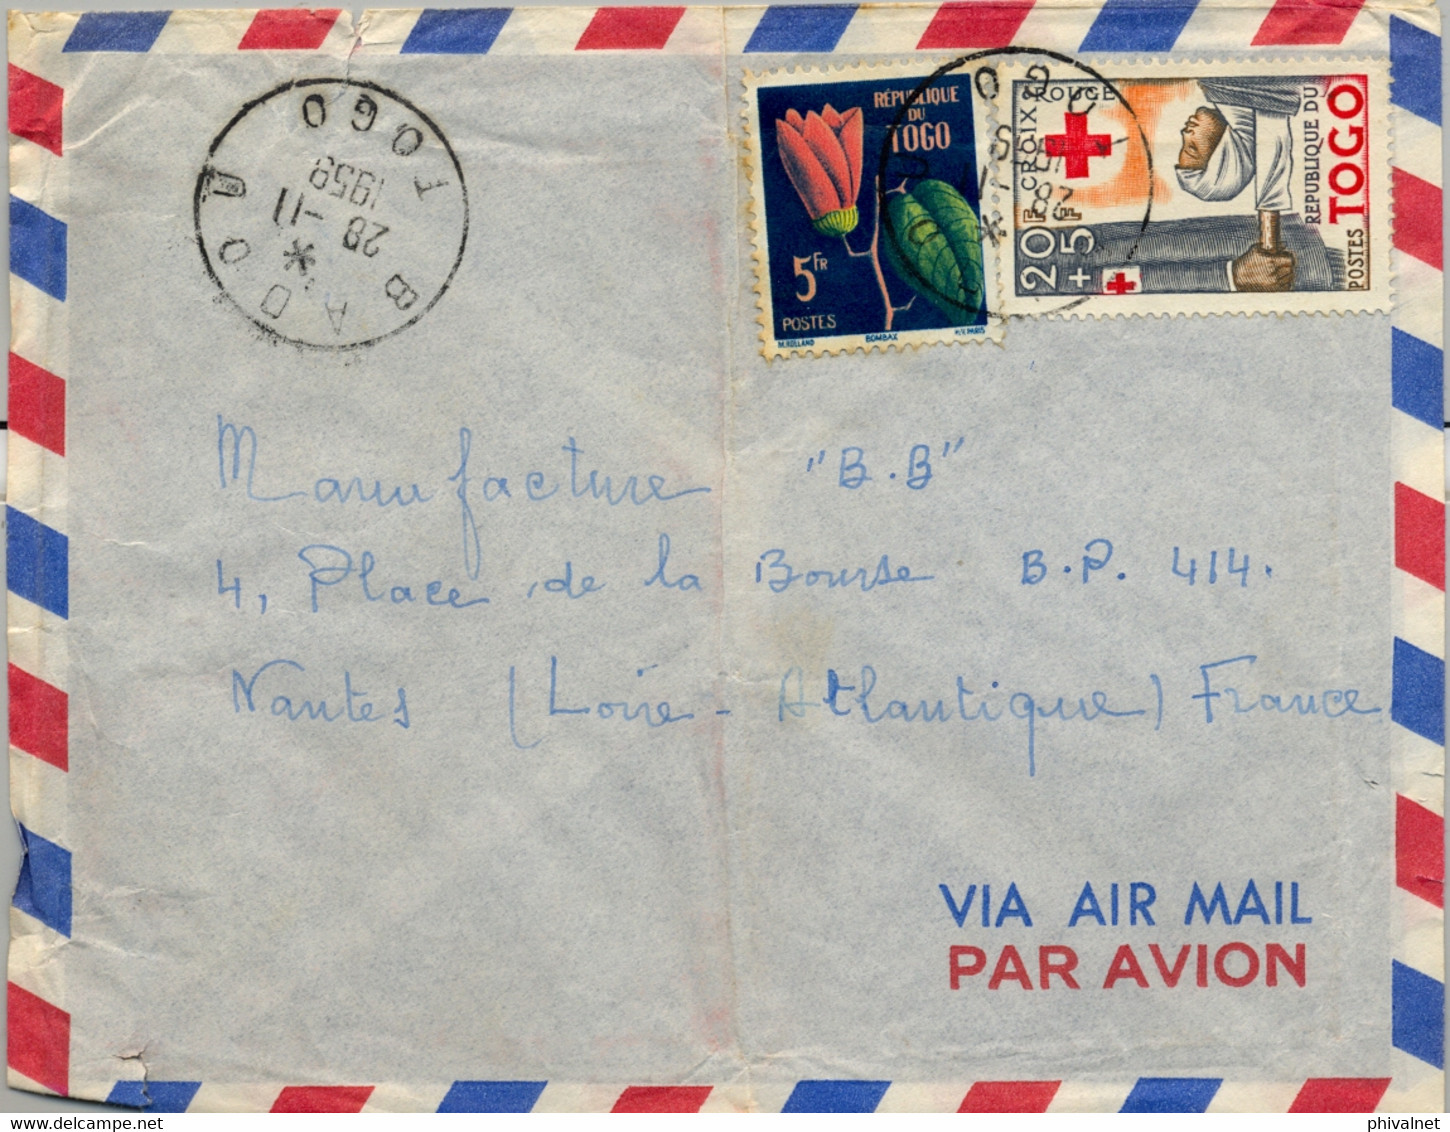 1959 TOGO , SOBRE CIRCULADO , BADOU - NANTES , FLORES , CRUZ ROJA , CROIX ROUGE  , CORREO AÉREO - Lettres & Documents